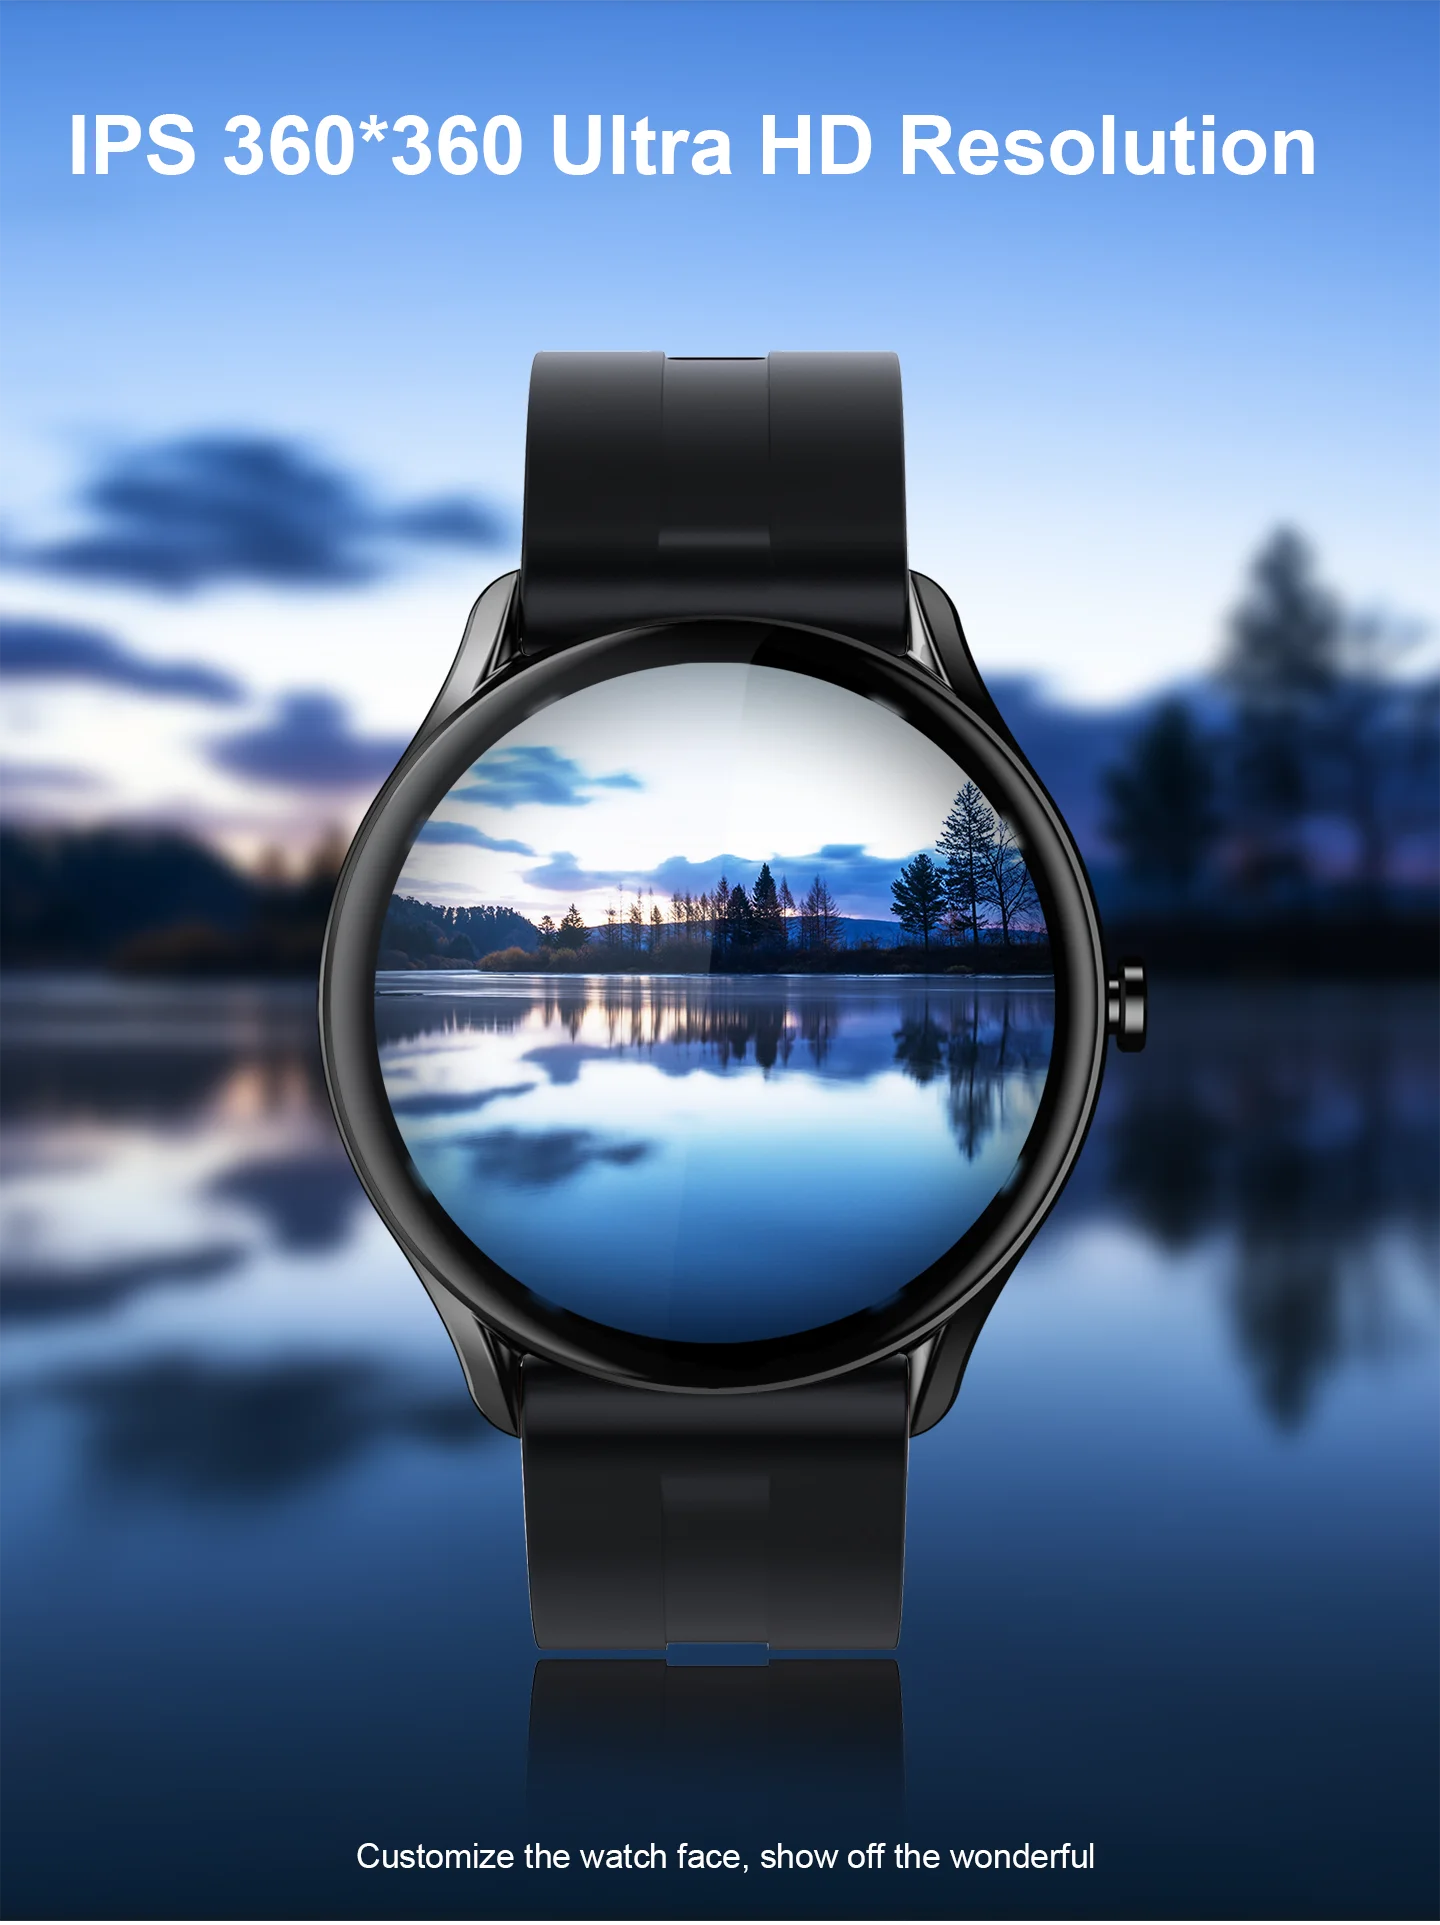 Gadgend new max9 smart watch men 1.32 inch full touch screen sport fitness ip68 waterproof smartwatch men women for android ios